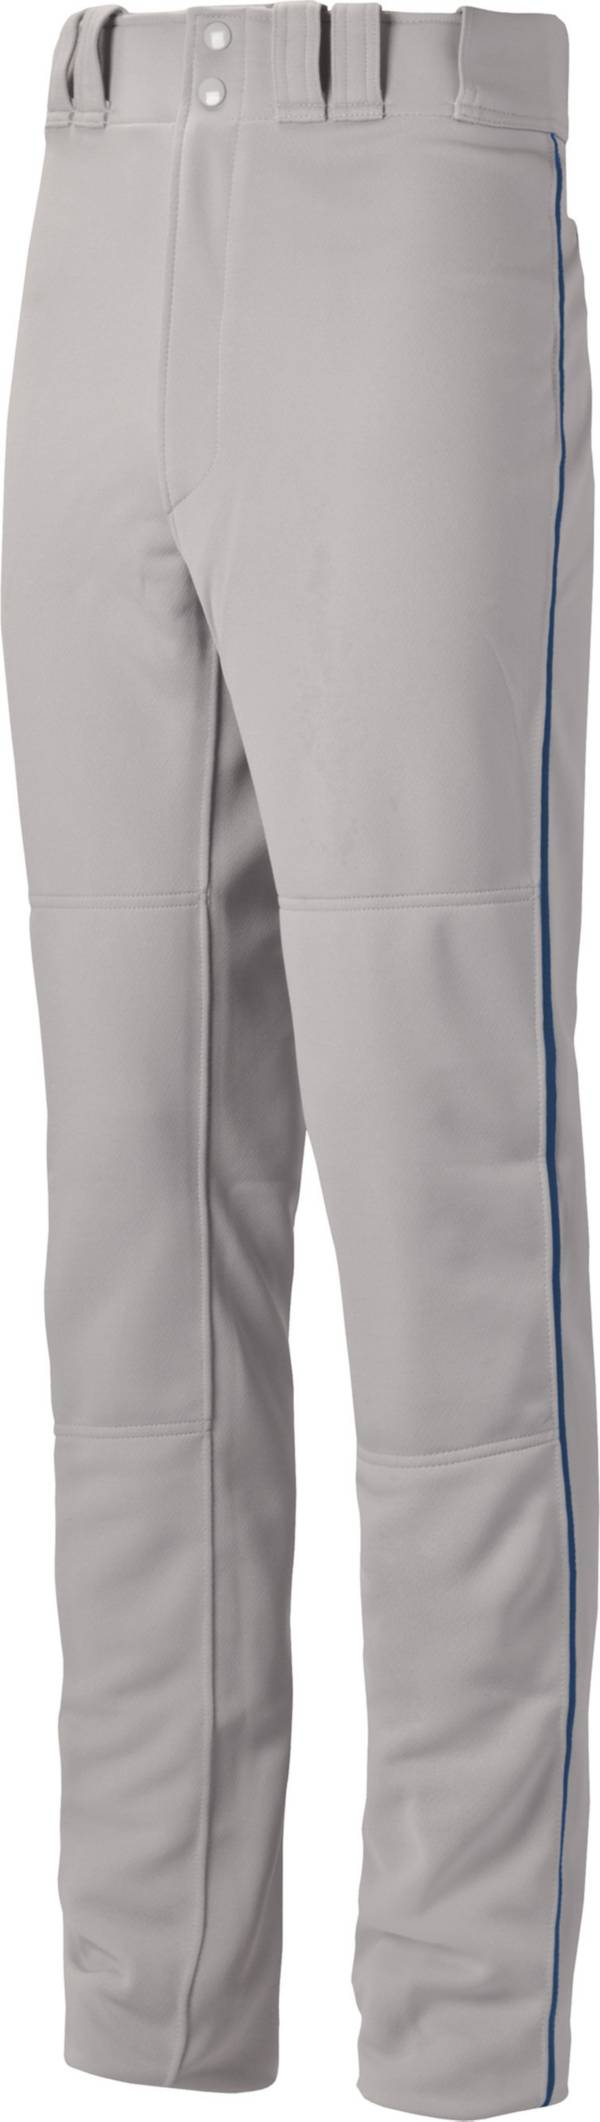 Mizuno Boys' Select Pro Piped Baseball Pants product image